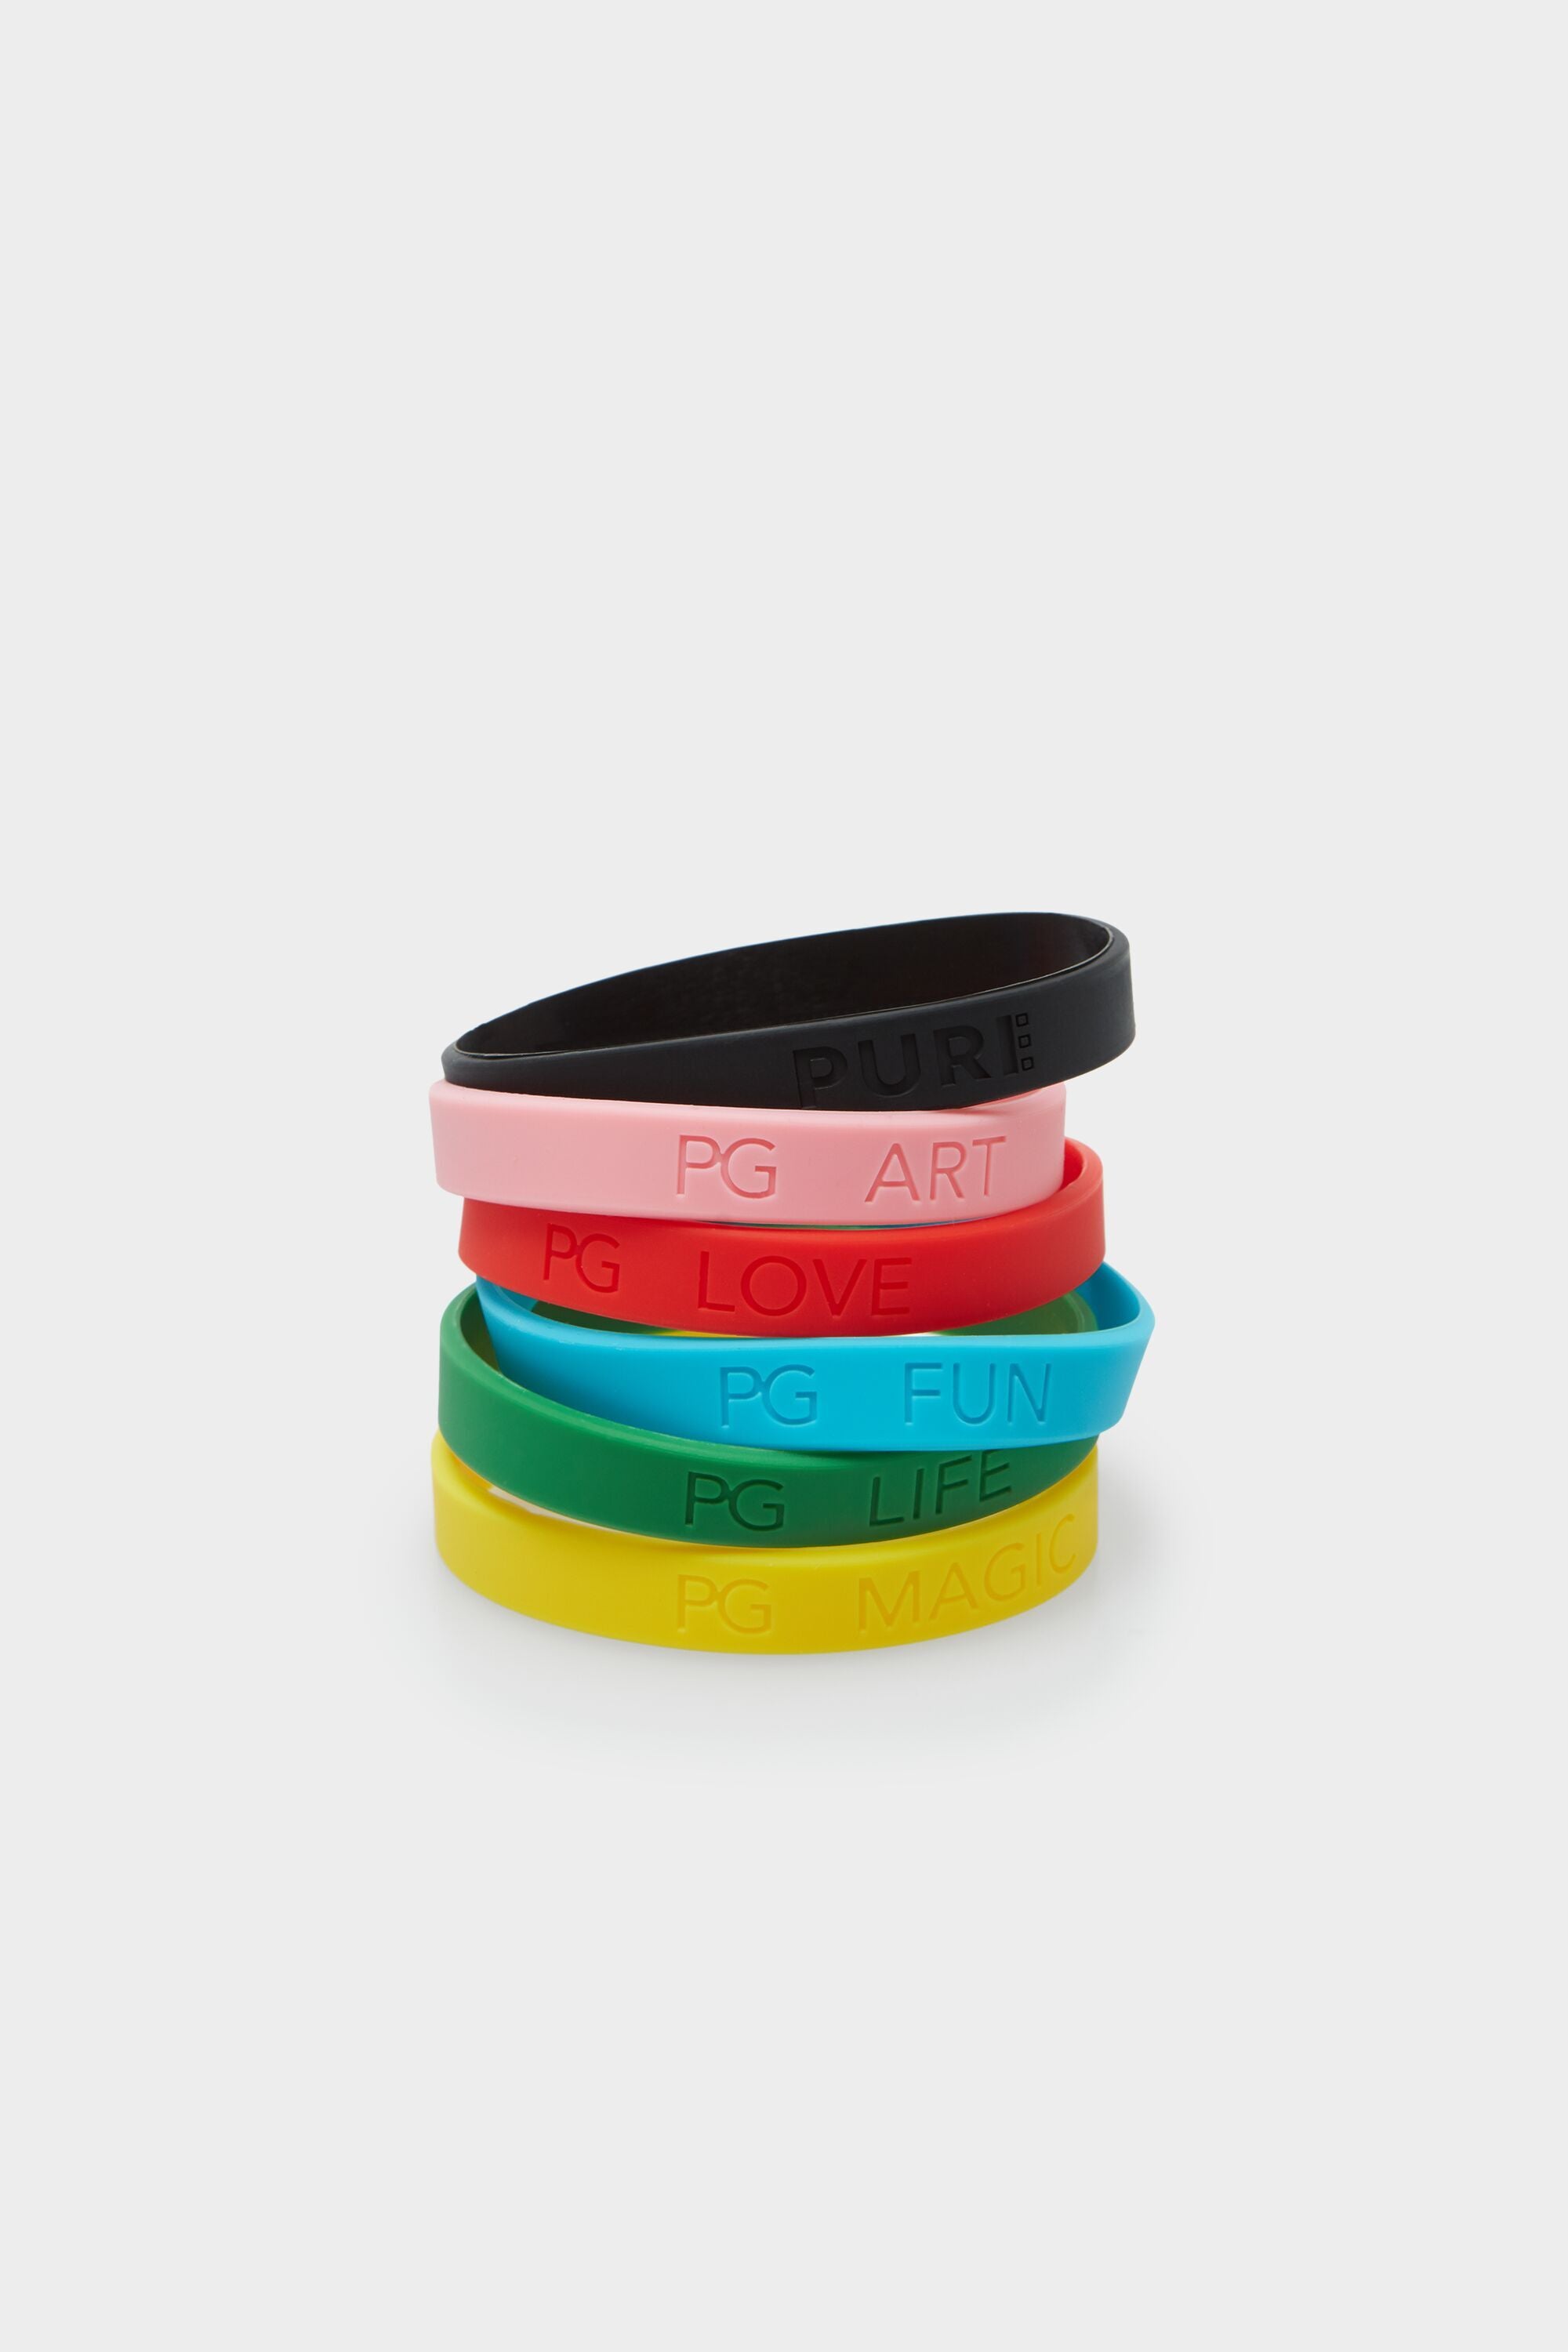 NEW NIKE 3D Wristbands Bracelets Pink Orange Tie Dye Silicone Rubber Lot of  4 | eBay